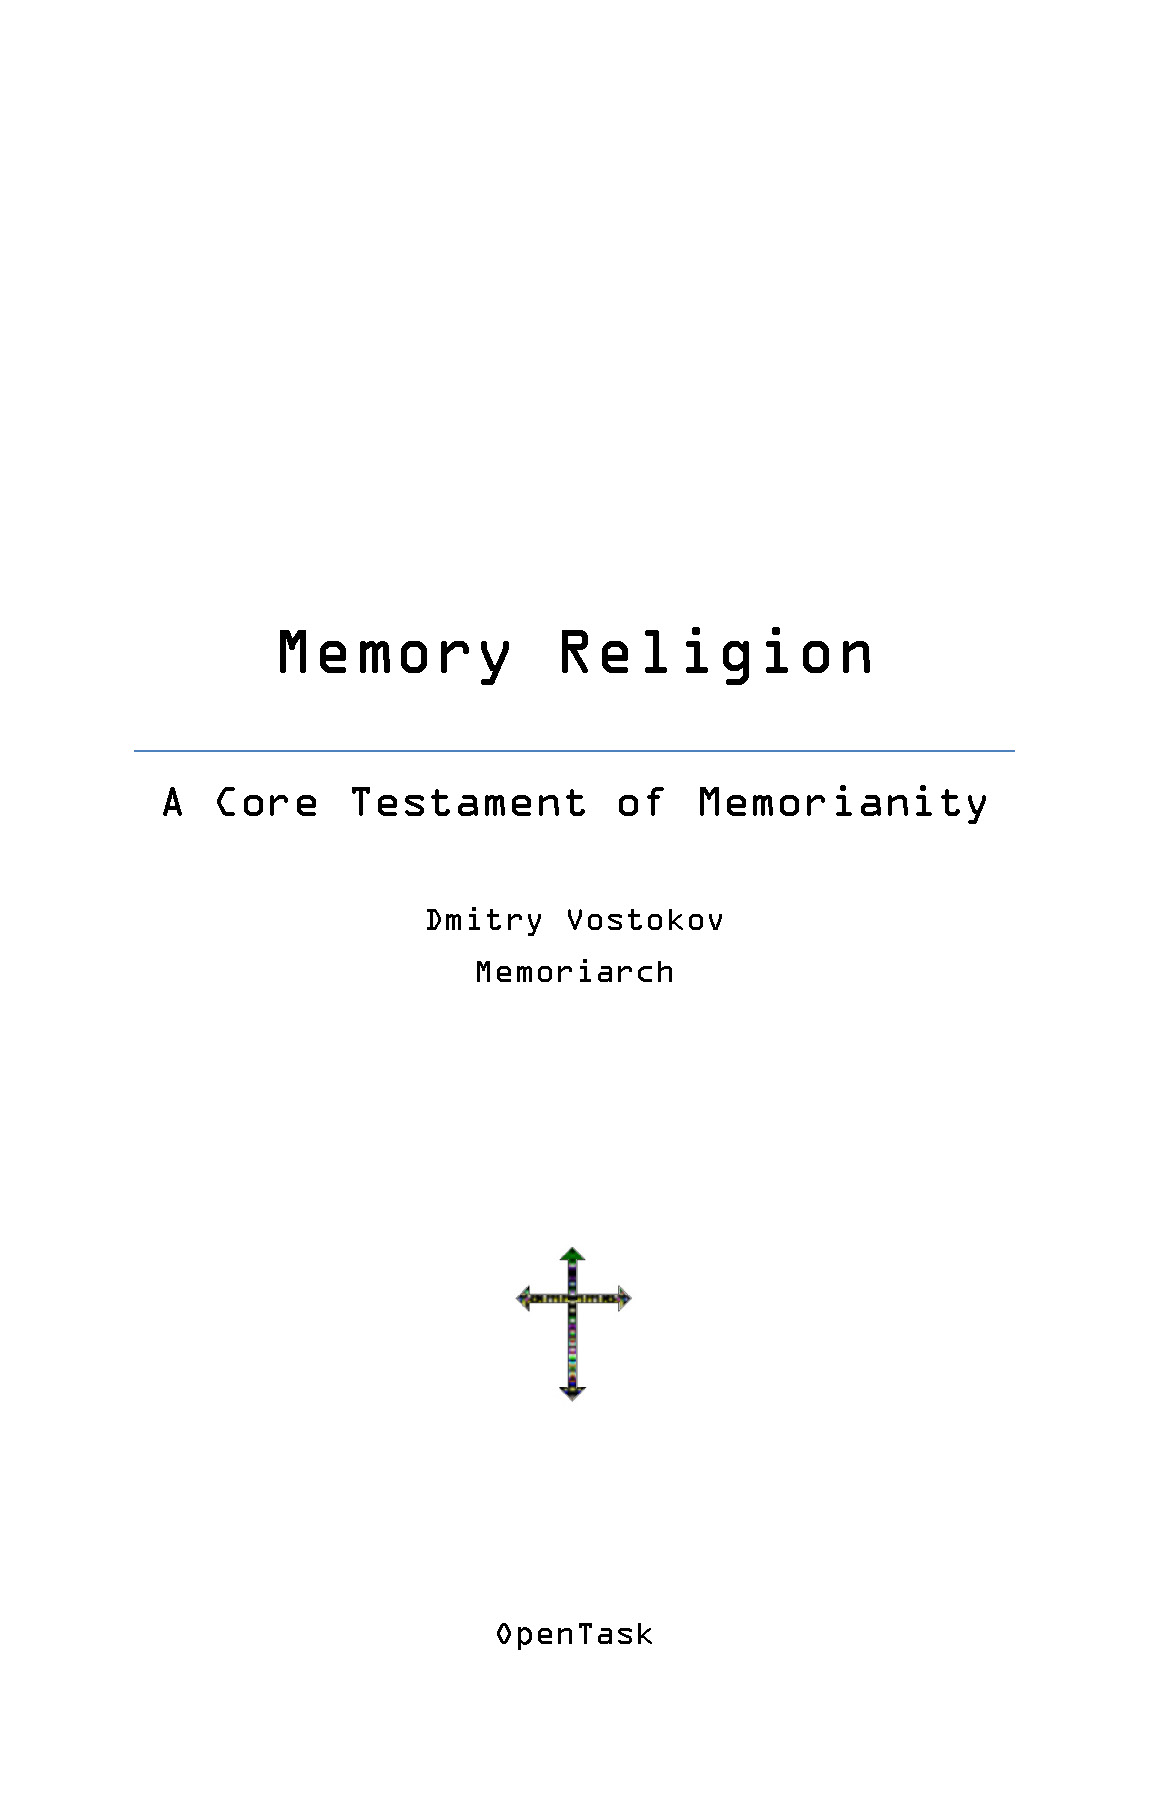 Core Testament of Memorianity (Memory Religion) Page 1